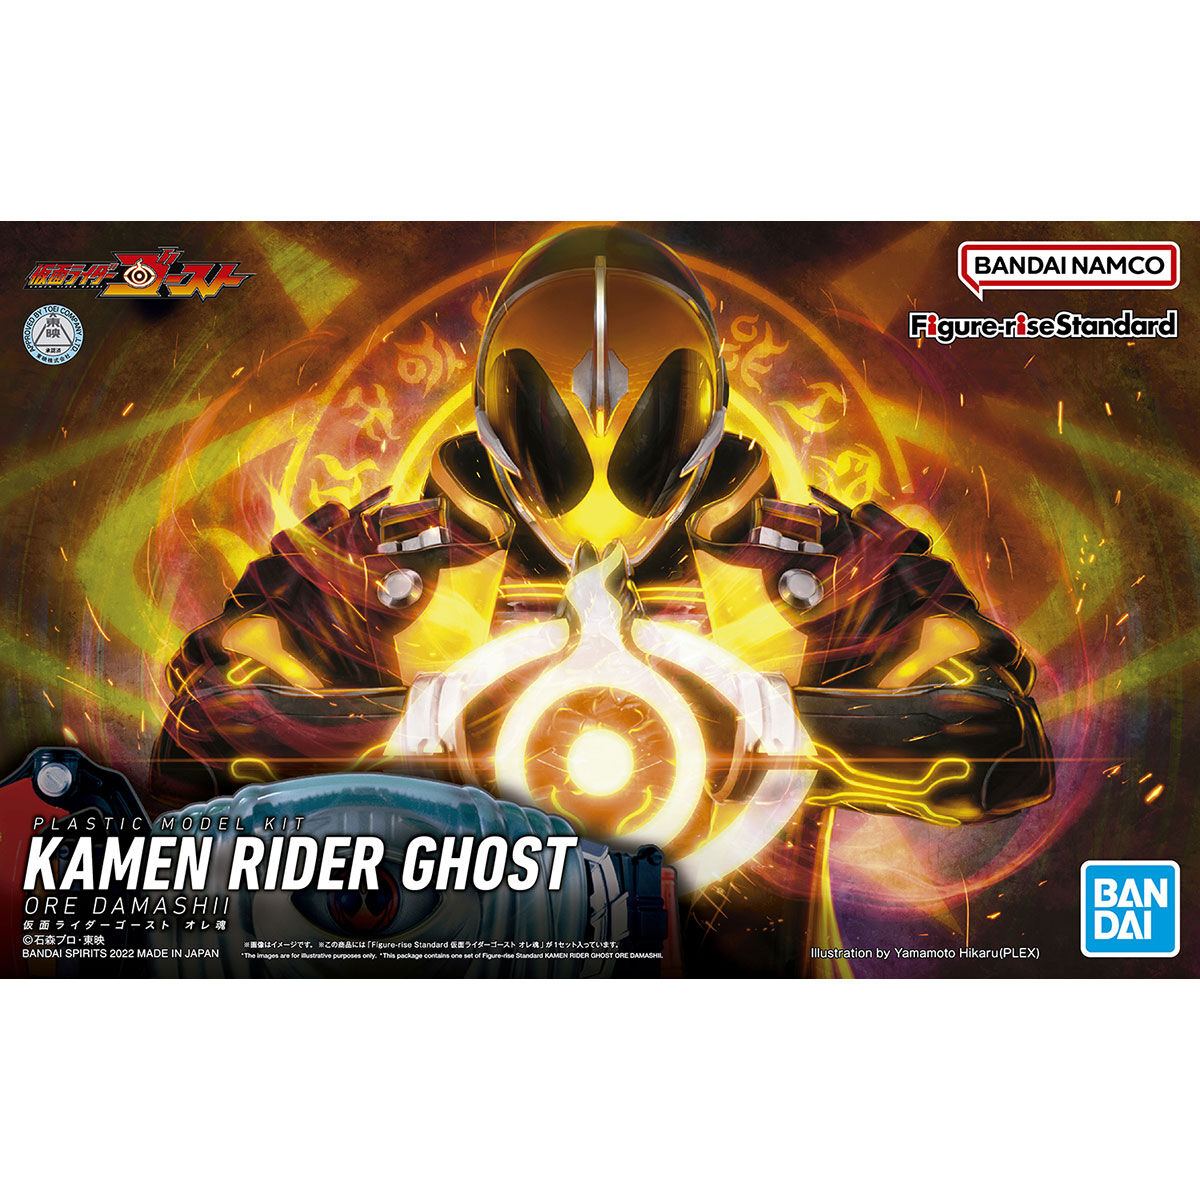 Kamen Rider Ghost - Figure-rise Standard 假面騎士Ghost 我魂